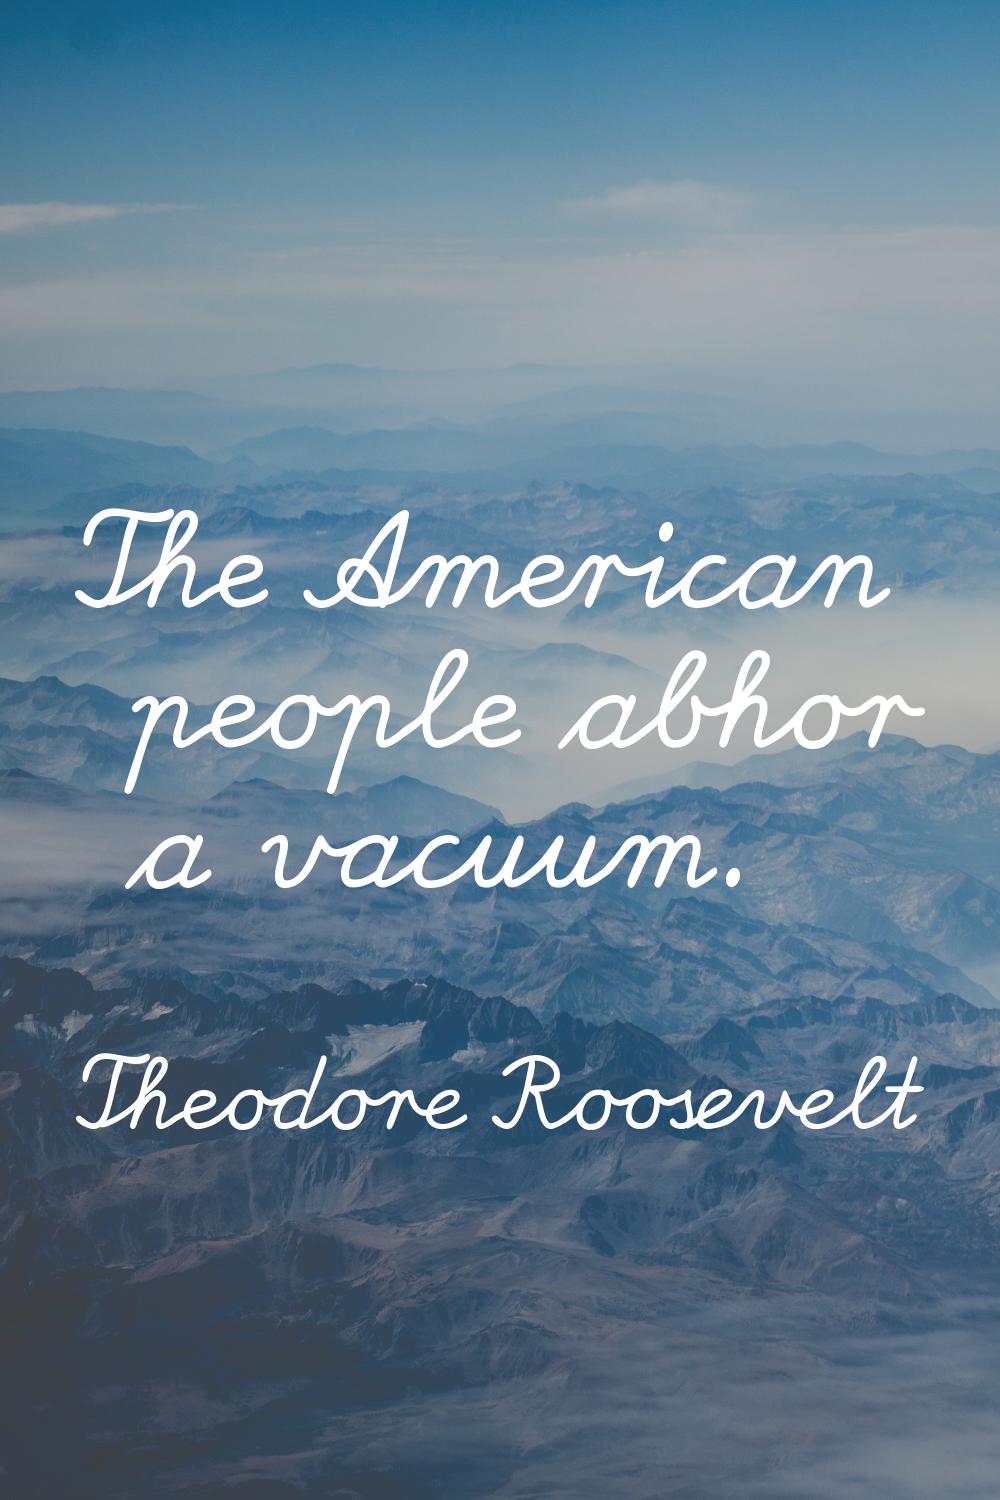 The American people abhor a vacuum.